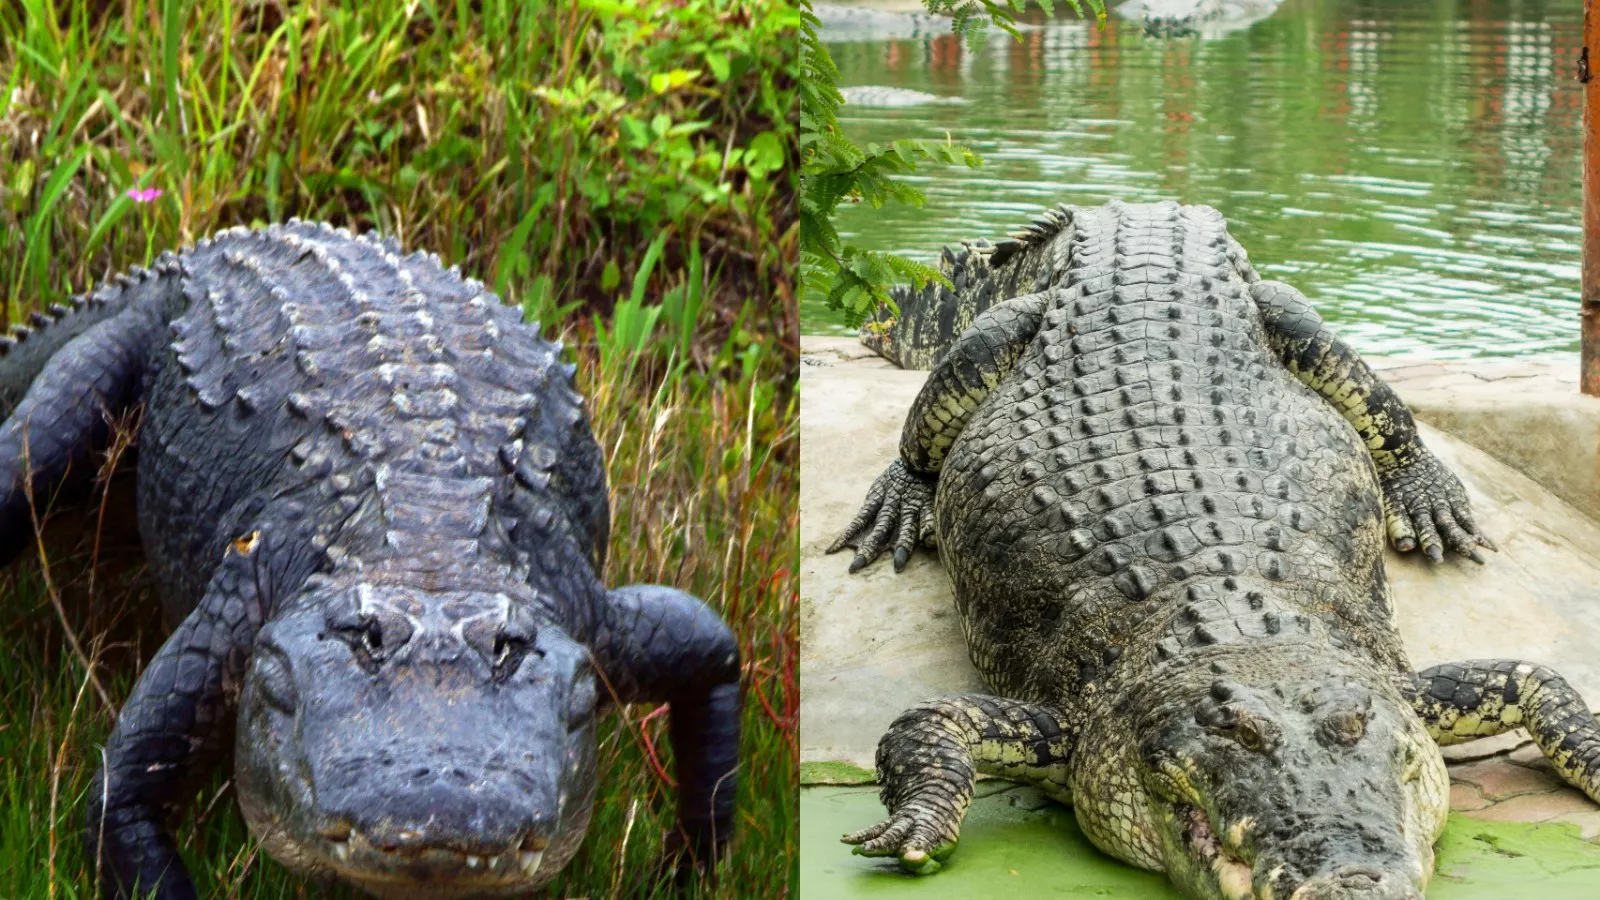 Does Florida Have Alligators or Crocodiles?